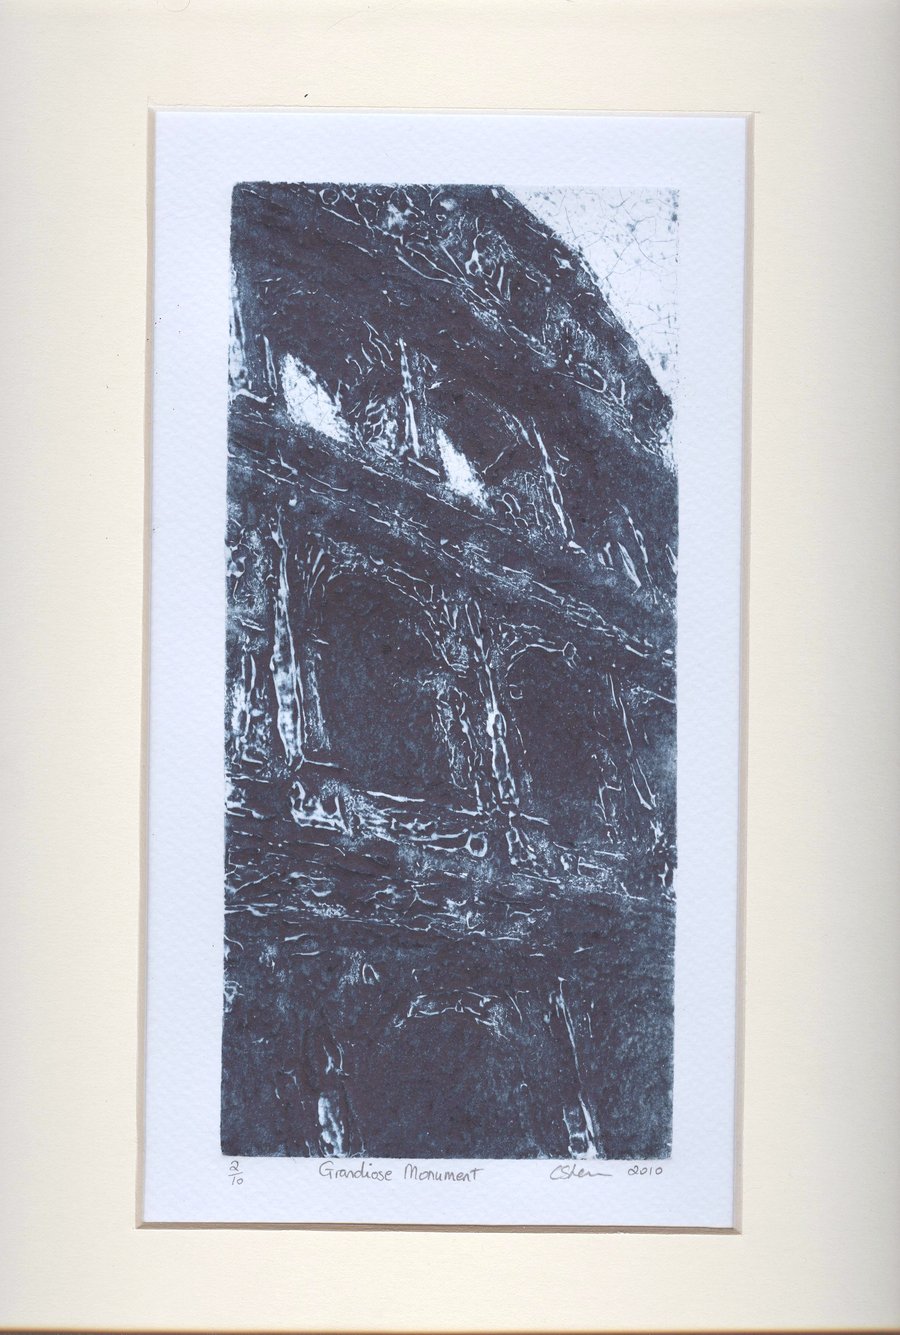 Grandoise Monument Limited Edition Collagraph Print Colosseum Art